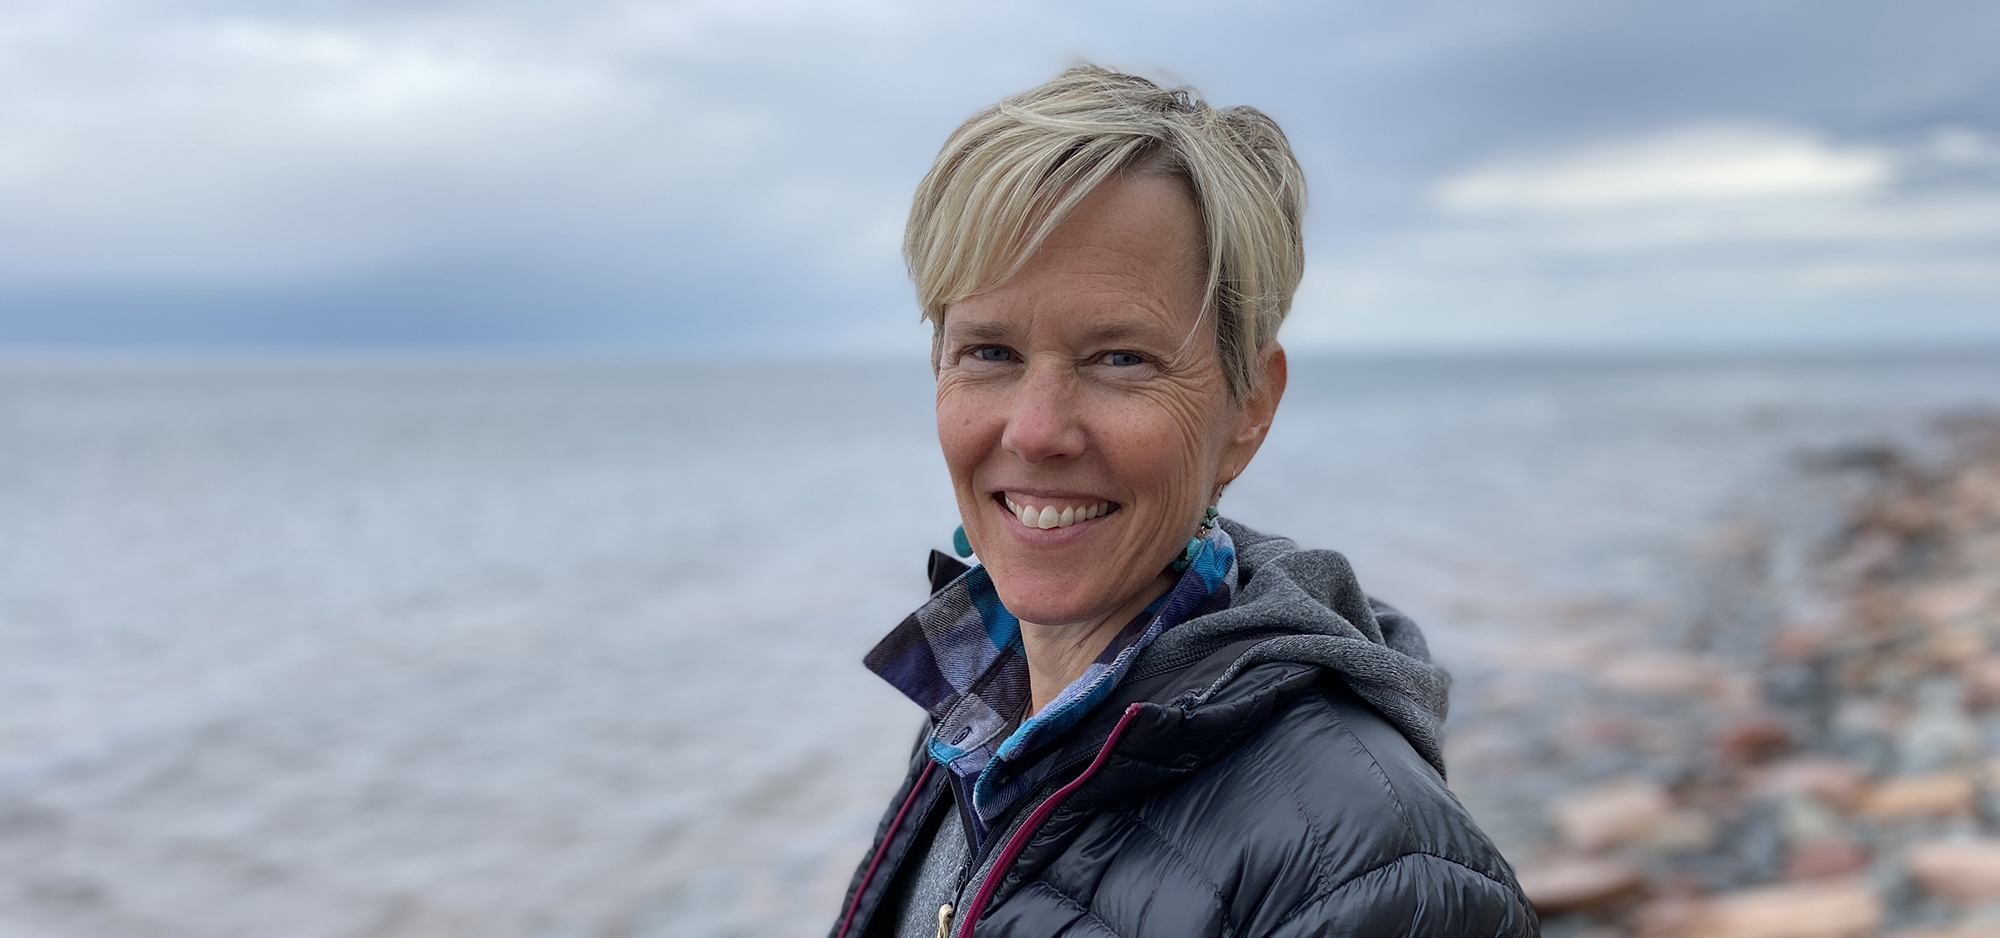 Amy Schrank standing on rocky shoreline of Lake Superior